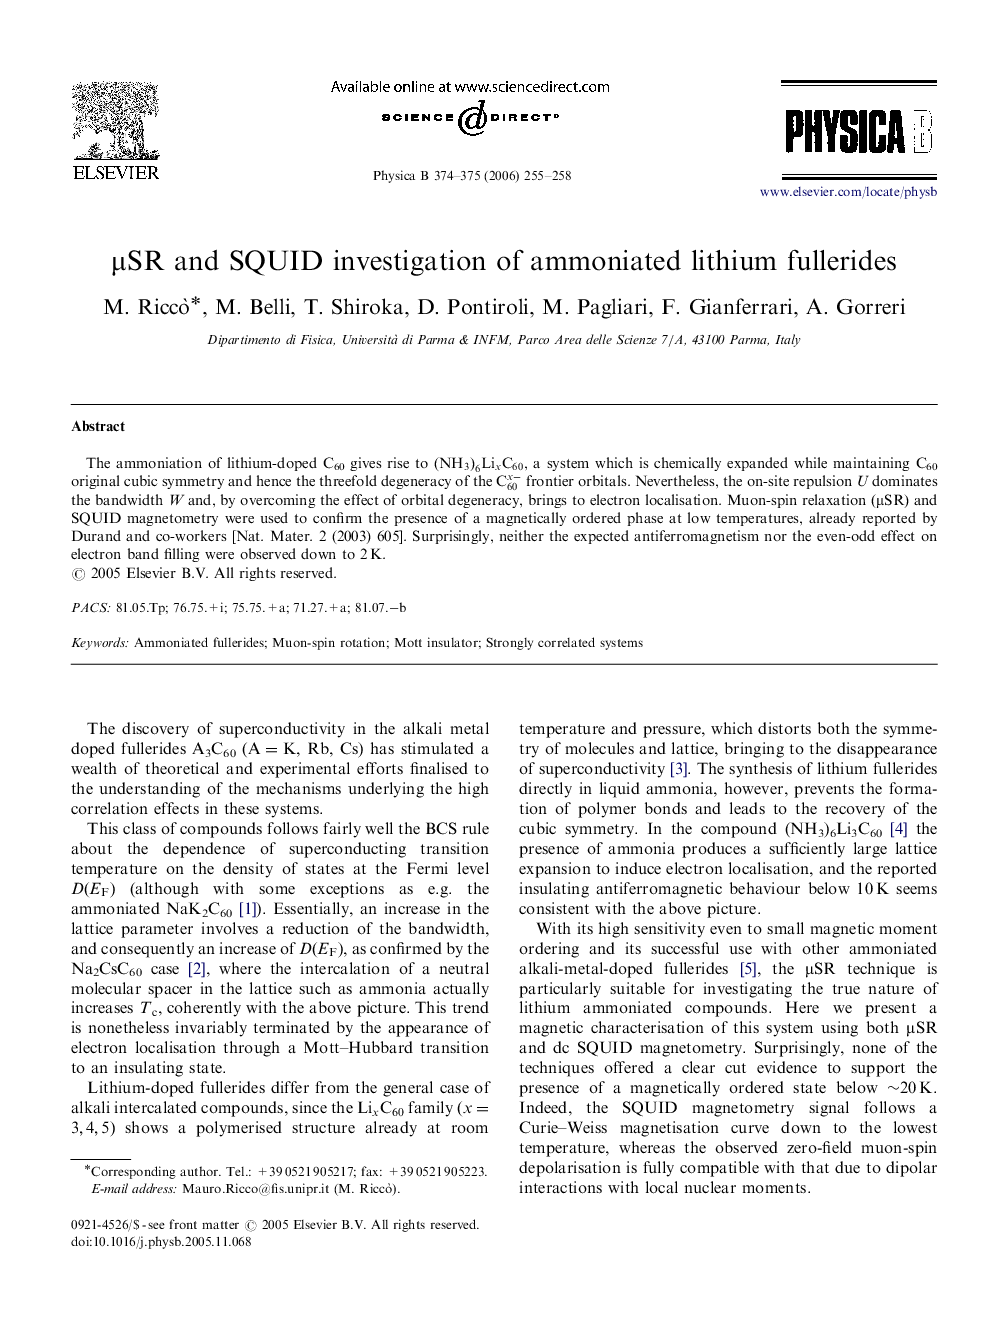 Î¼SR and SQUID investigation of ammoniated lithium fullerides